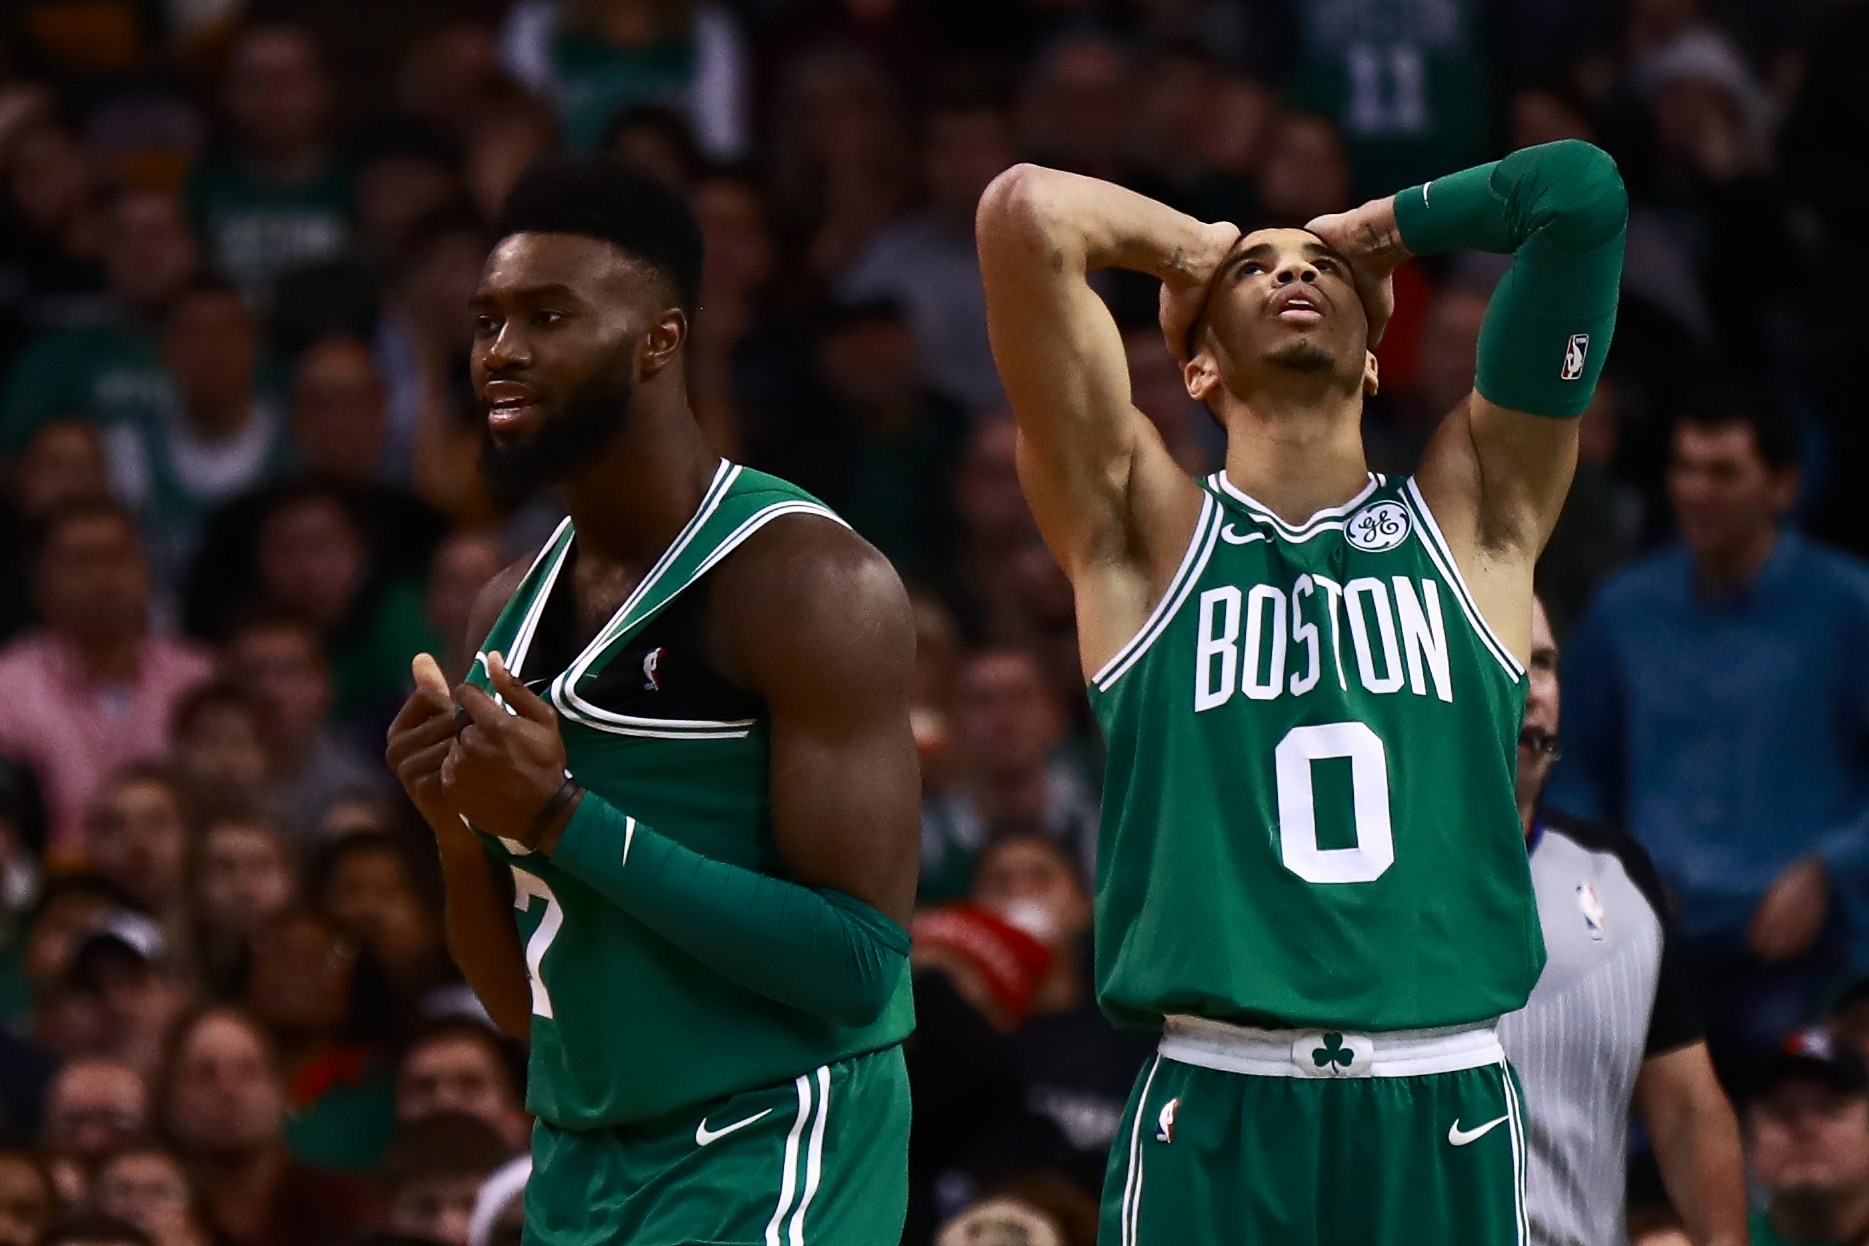 Celtics reach deal to put GE logo on uniform